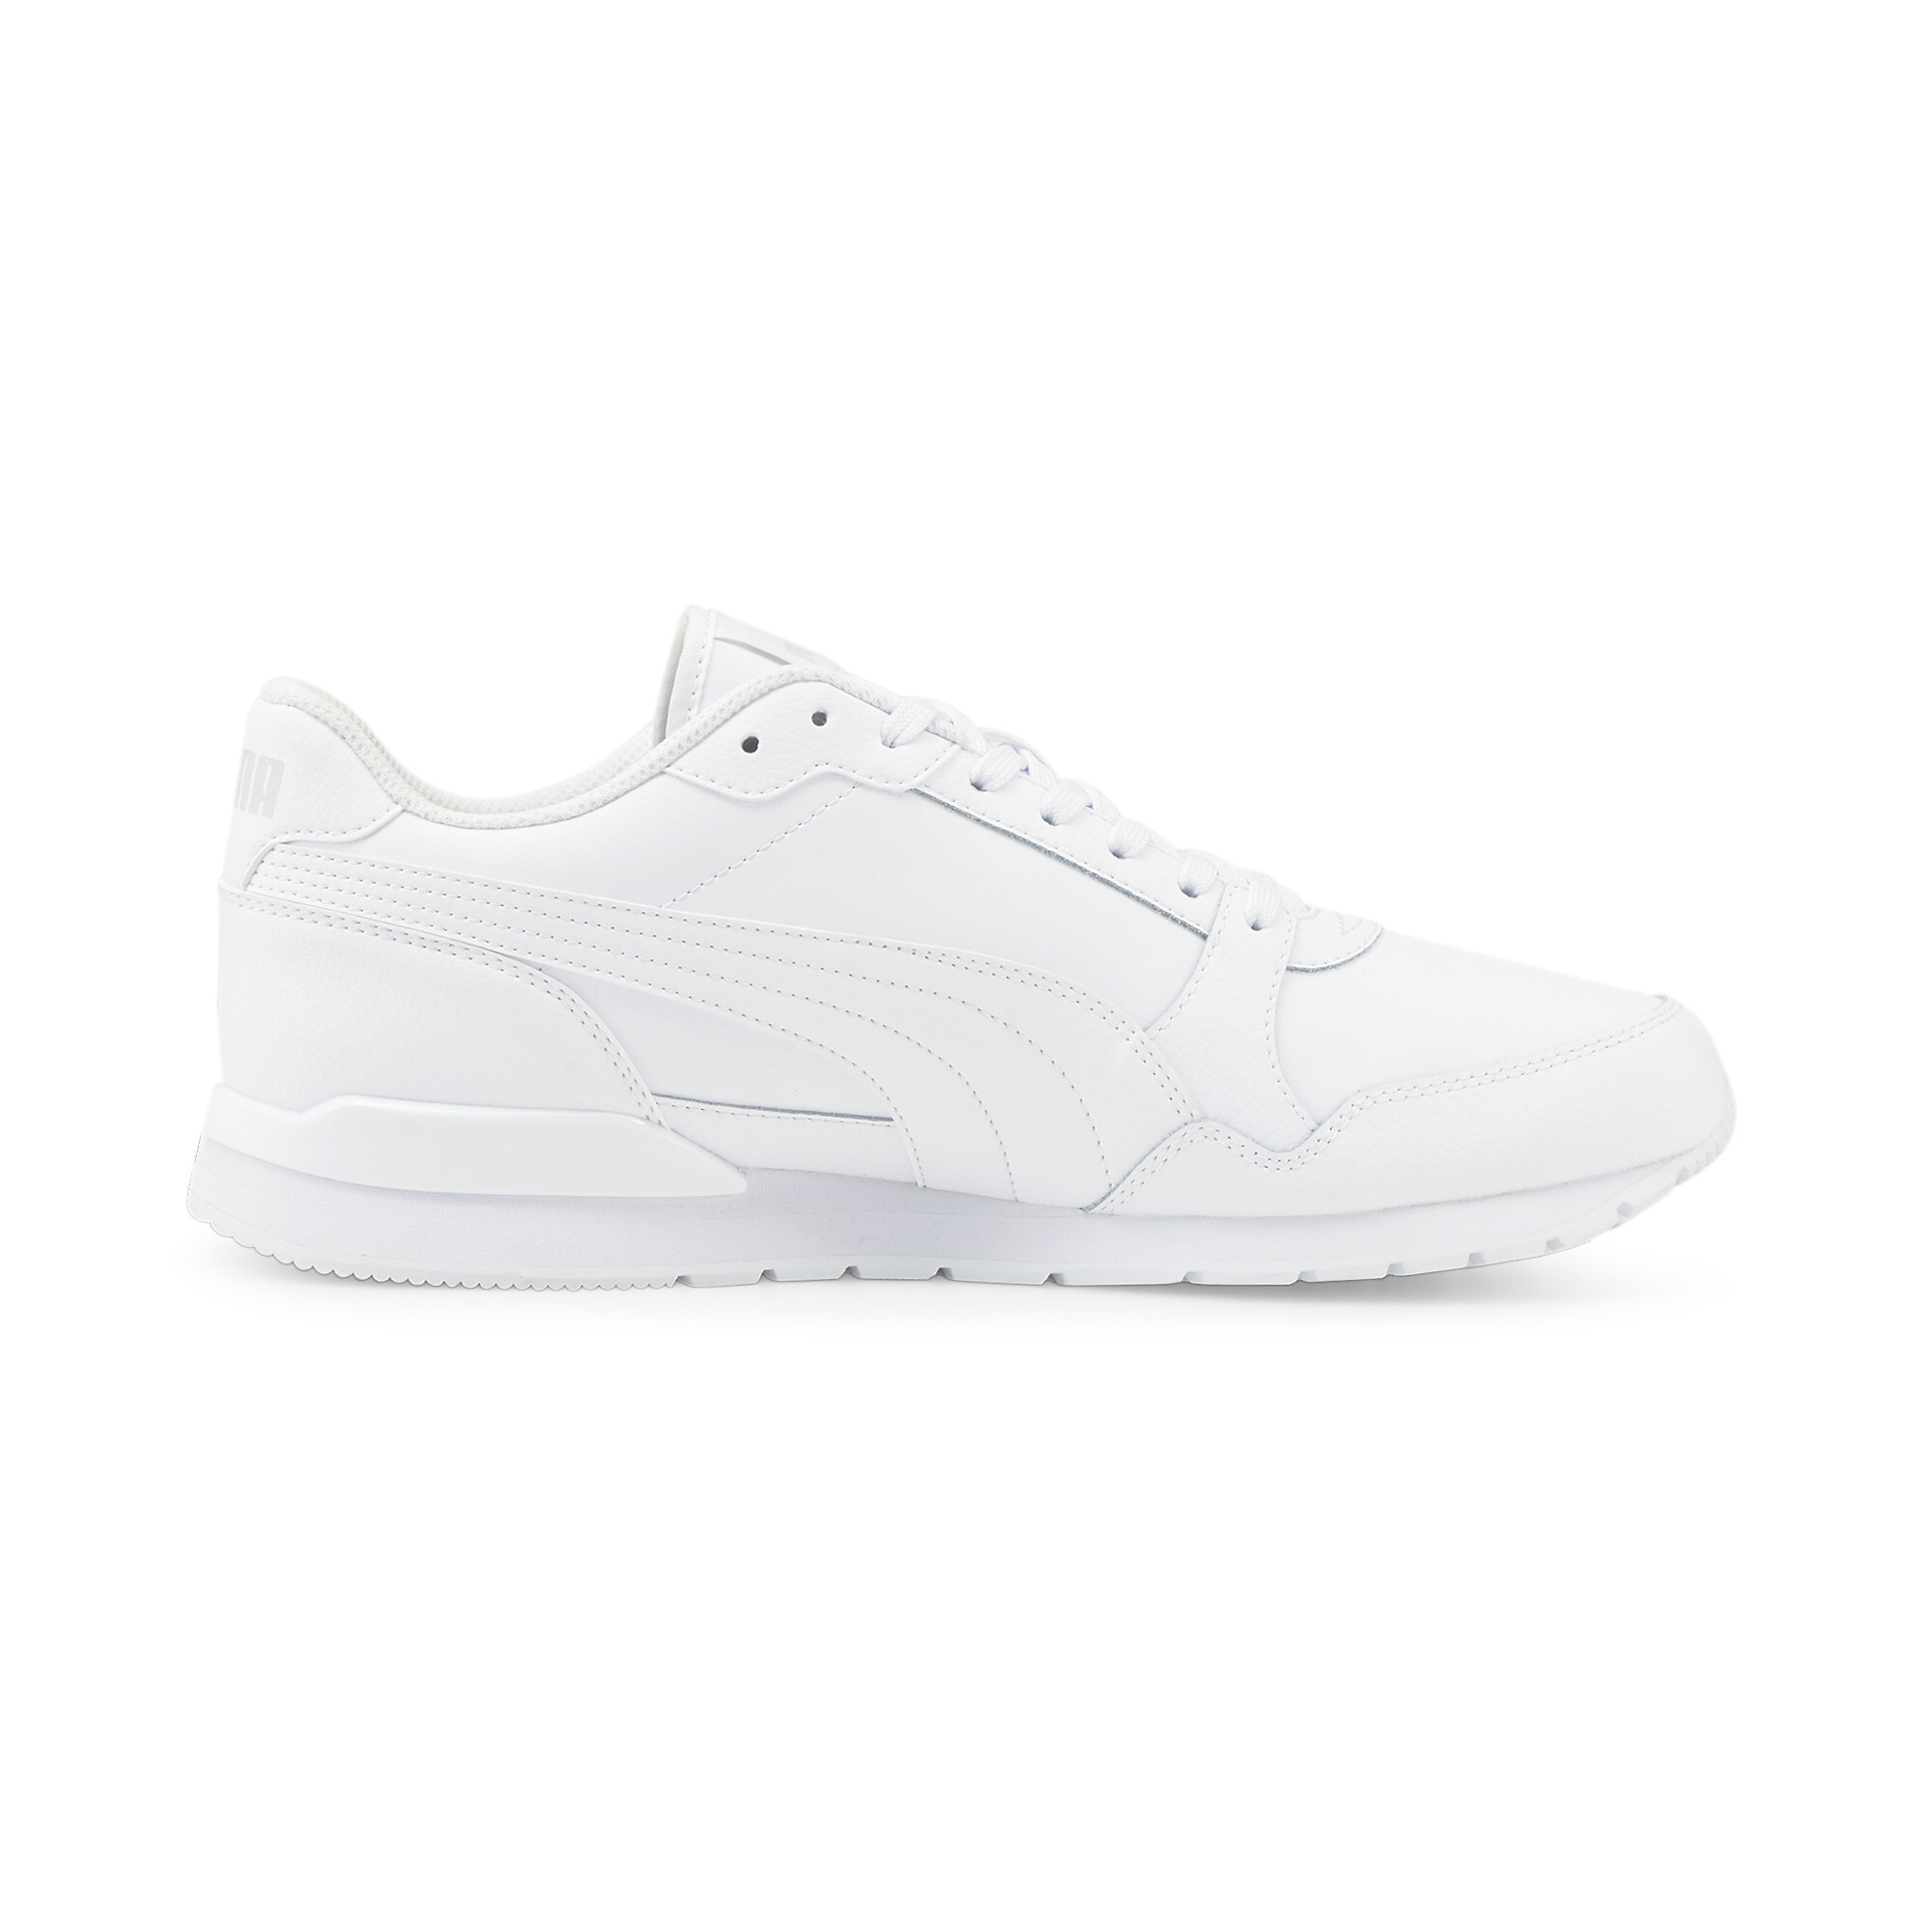 Puma ST Runner V3 L Trainers, White, Size 43, Shoes